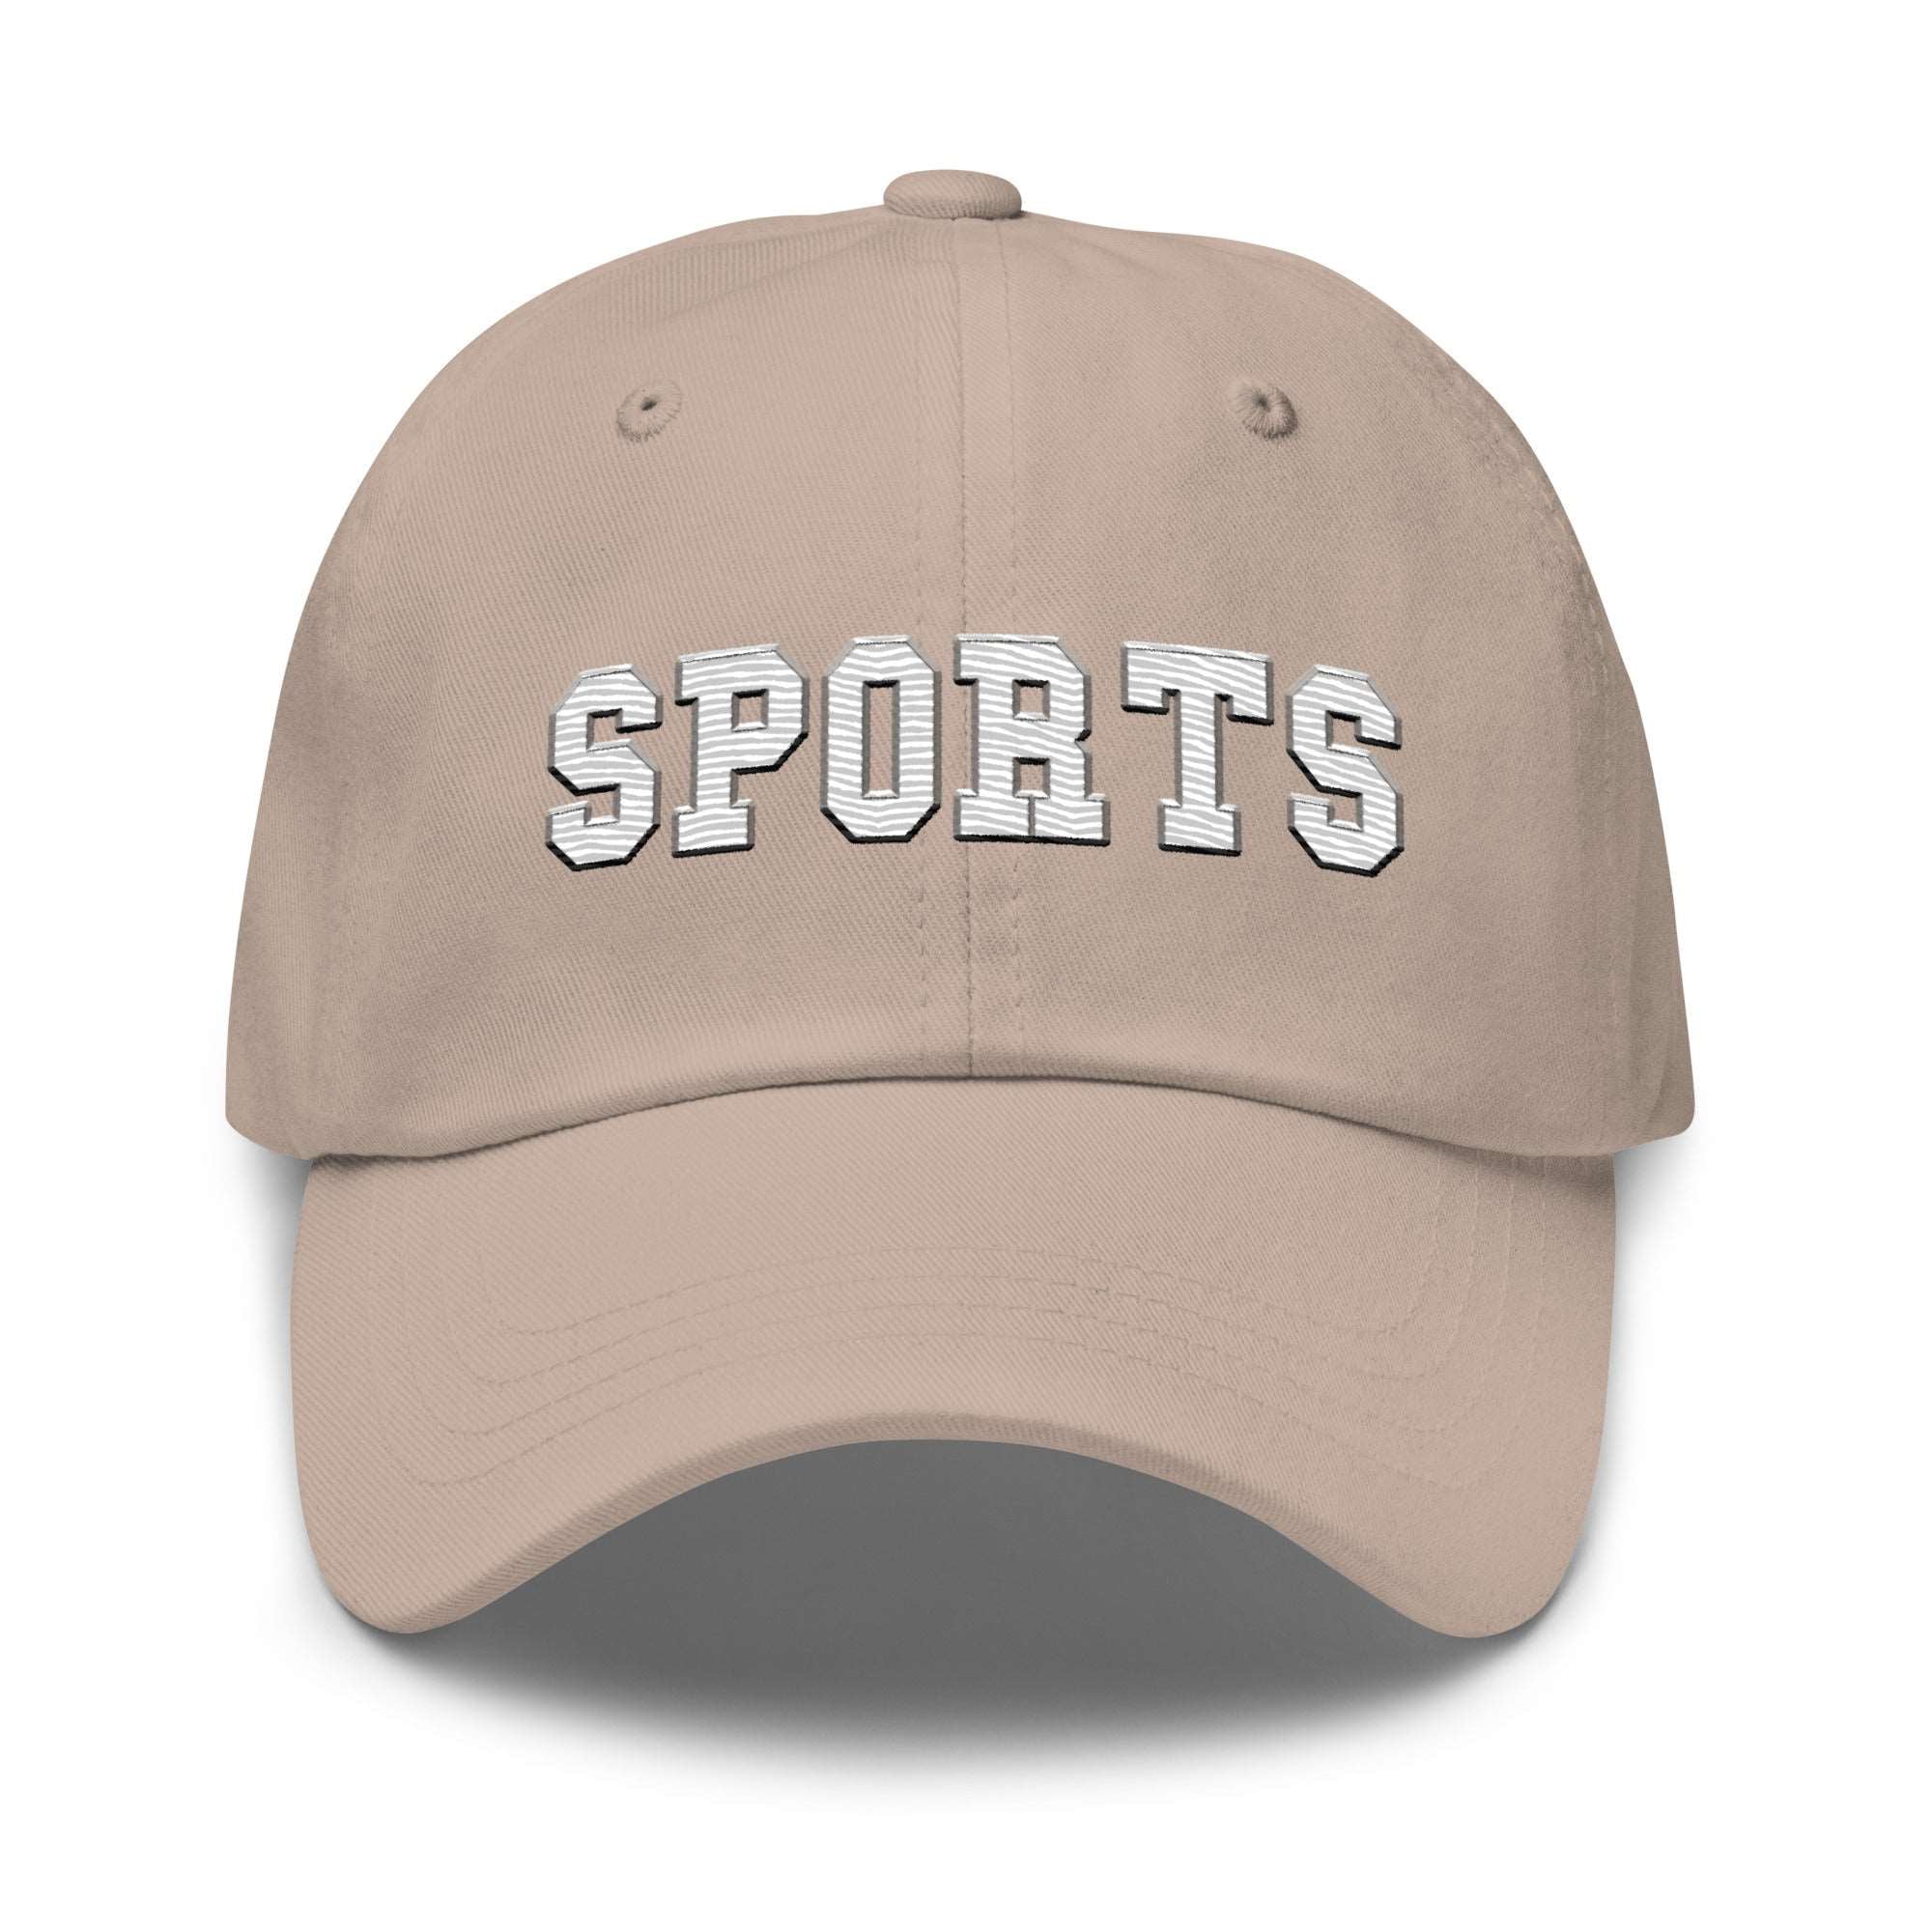 SPORTS! Dad hat